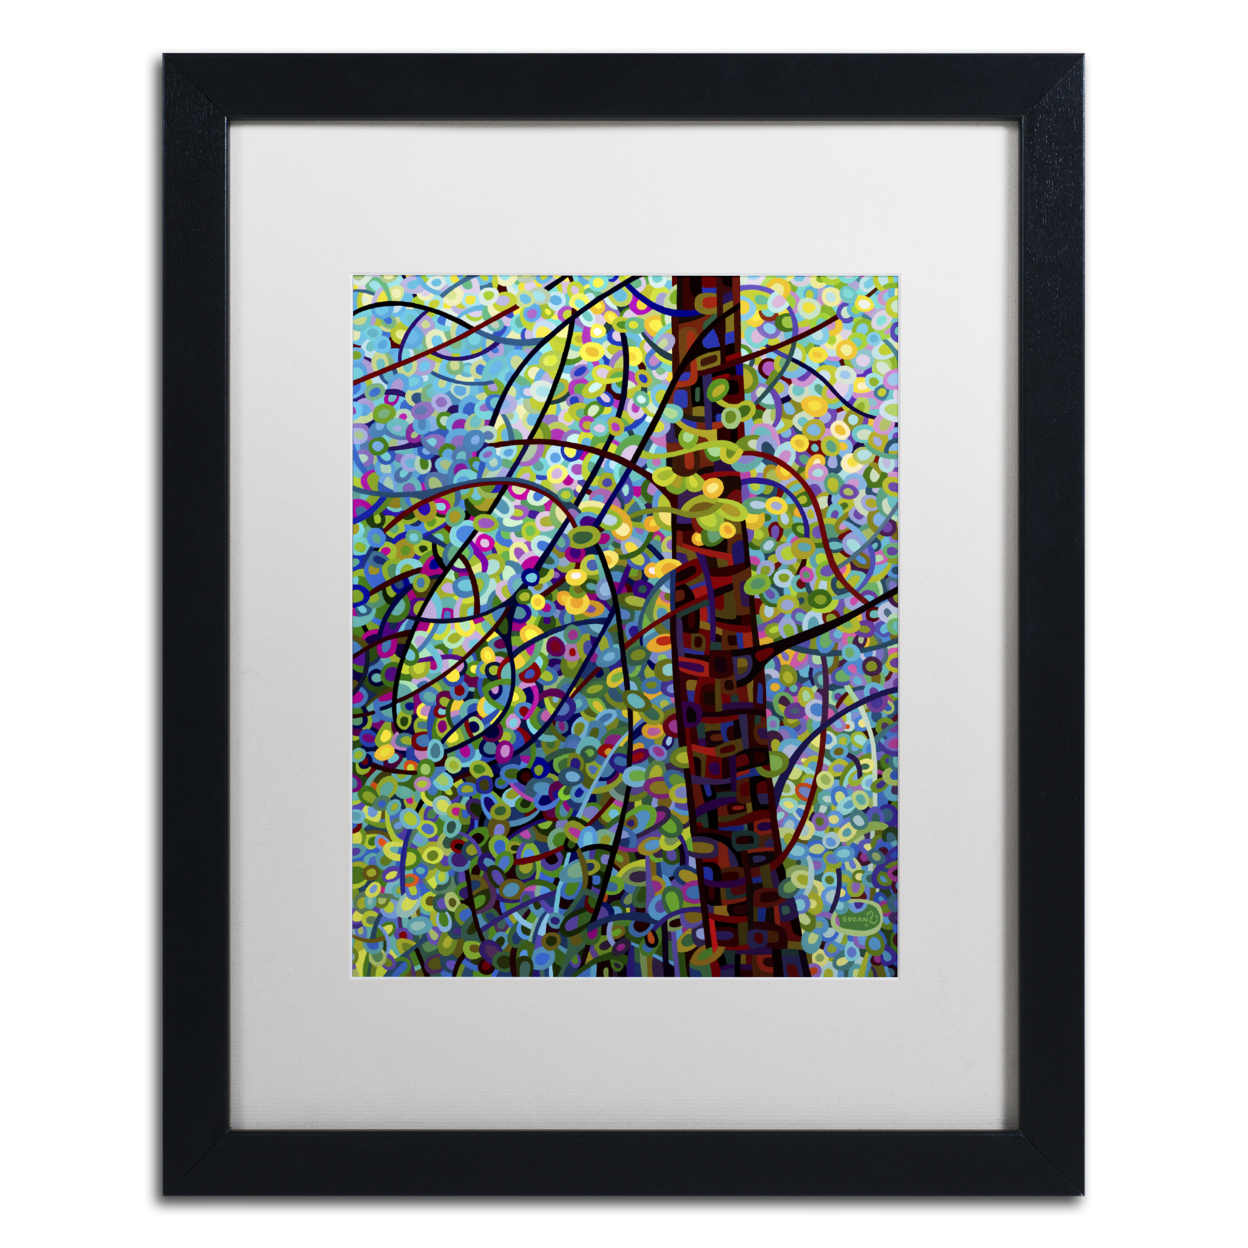 Mandy Budan 'Pine Sprites' Black Wooden Framed Art 18 X 22 Inches